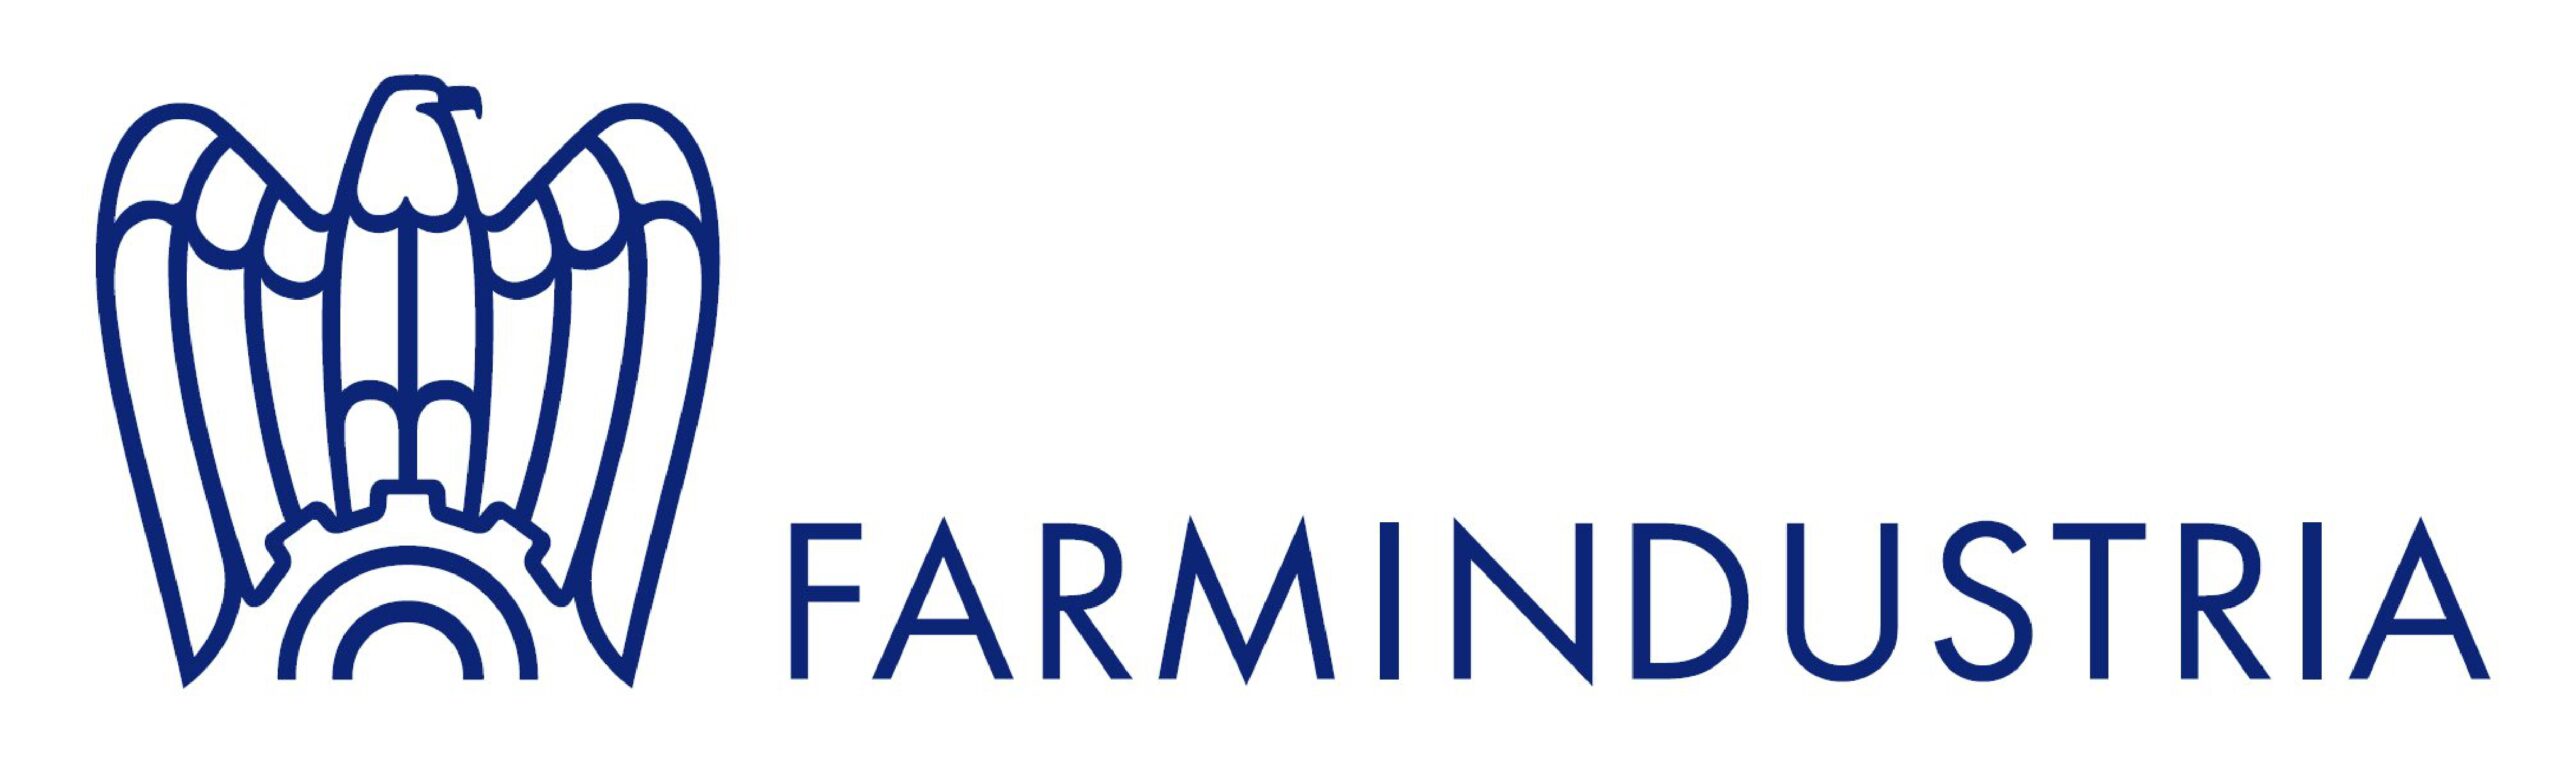 Farmindustria logo